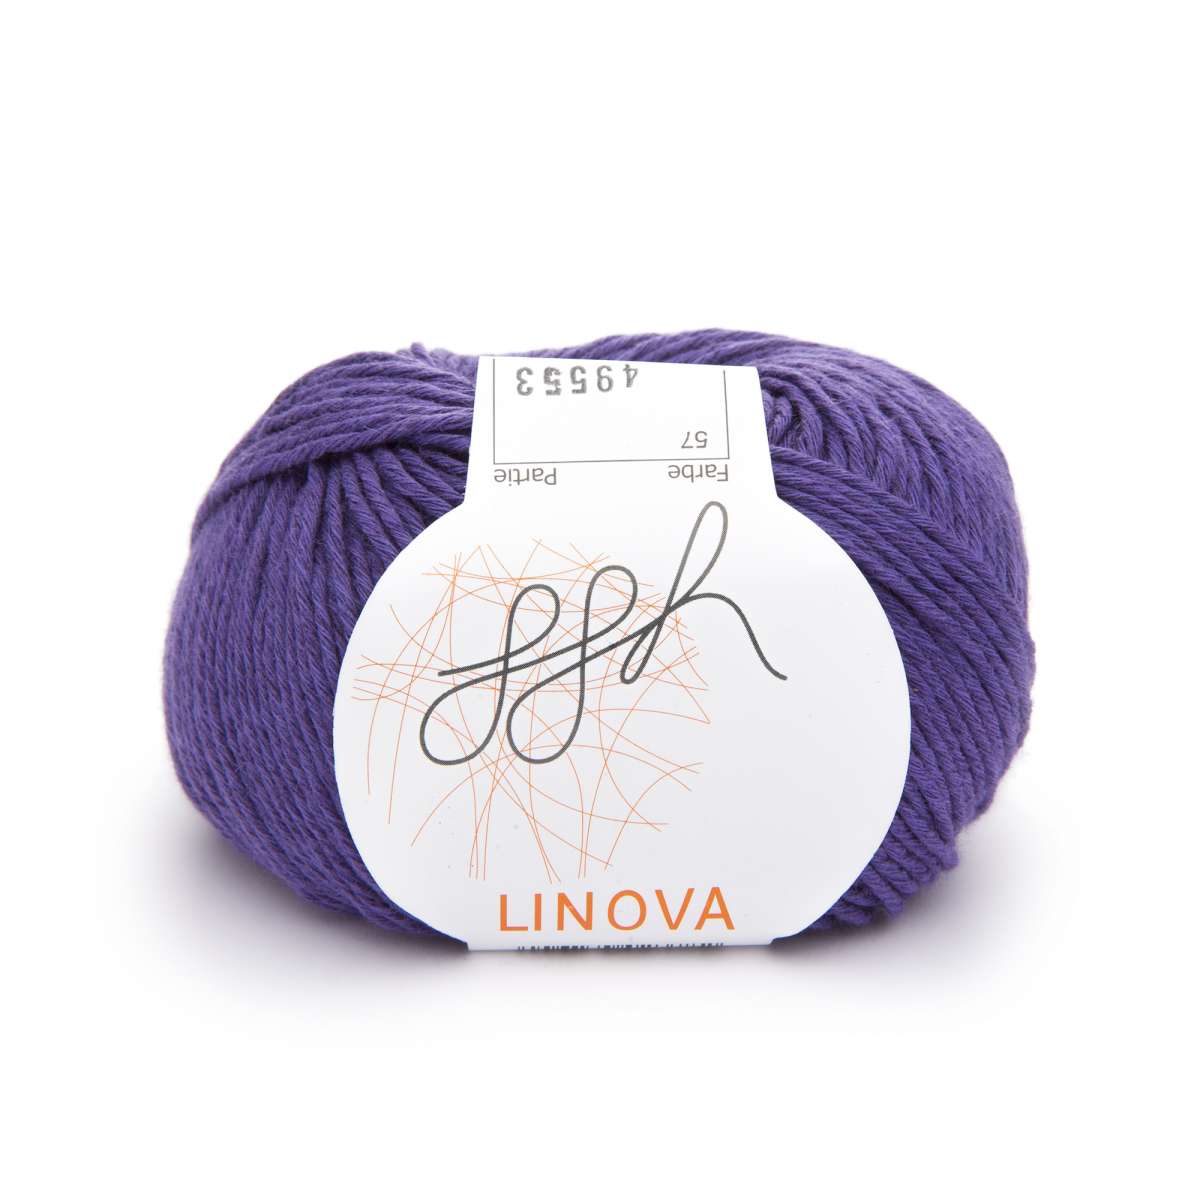 ggh - Linova - Colour 057 Light Purple